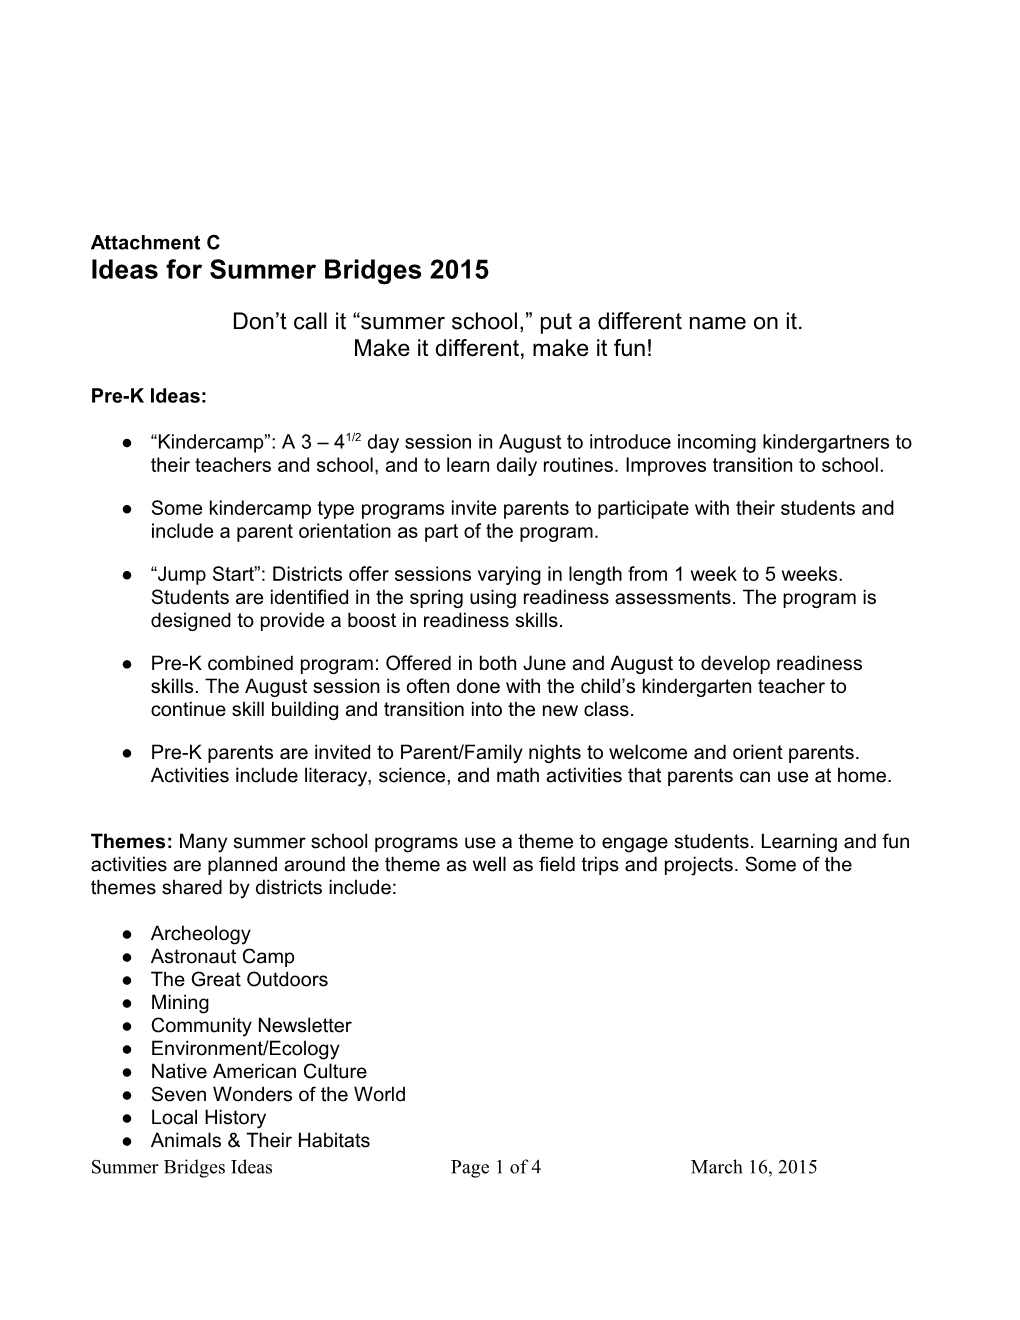 Ideas for Summer Bridges 2015